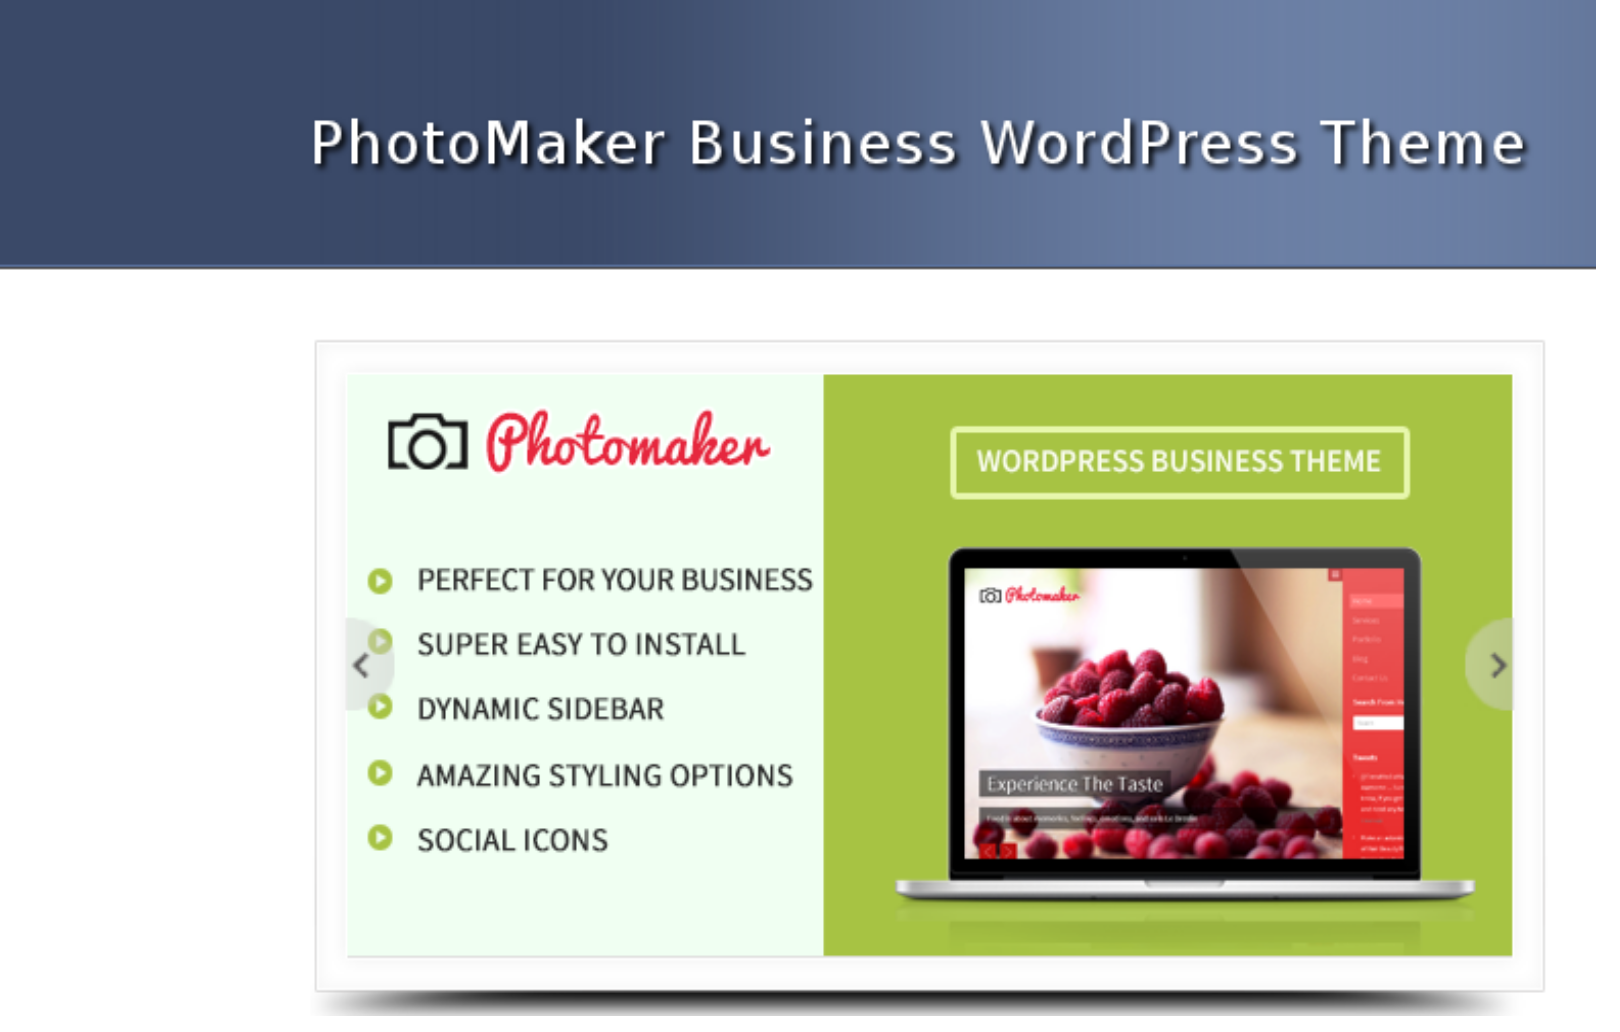 PhotoMaker - ecommerce WordPress theme of the May